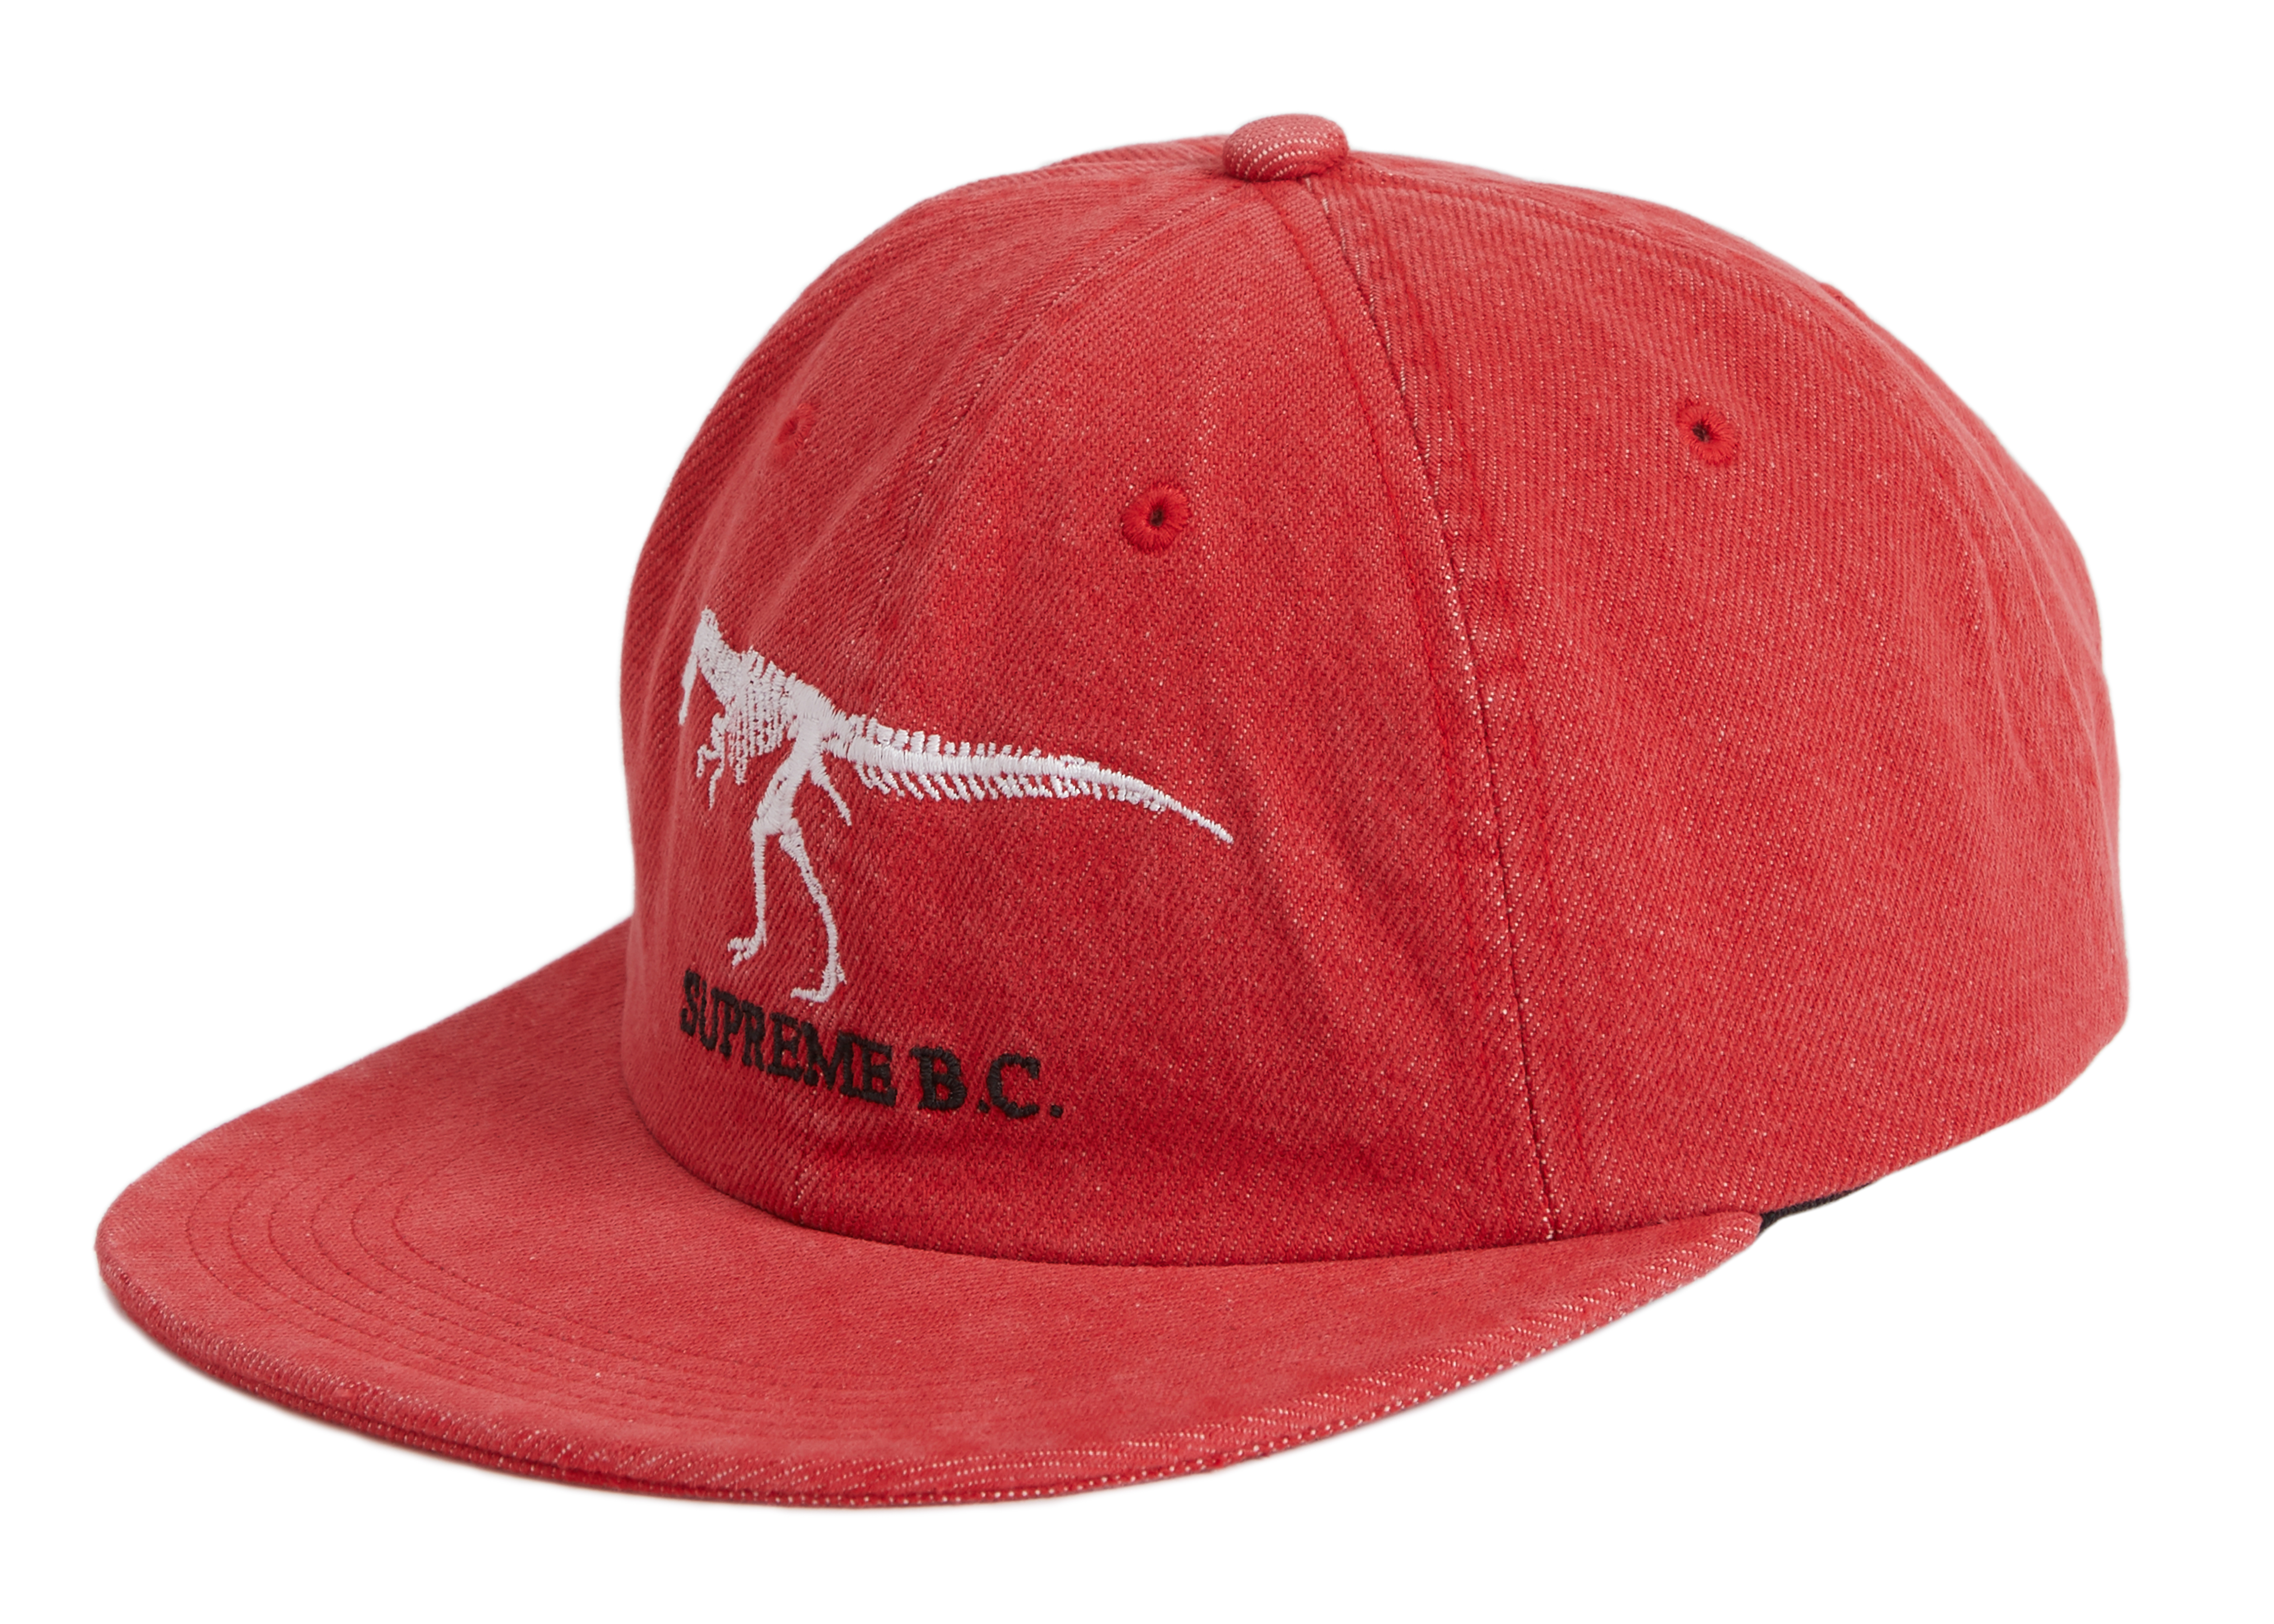 Supreme B.C. 6-Panel Hat Red - FW18 - US